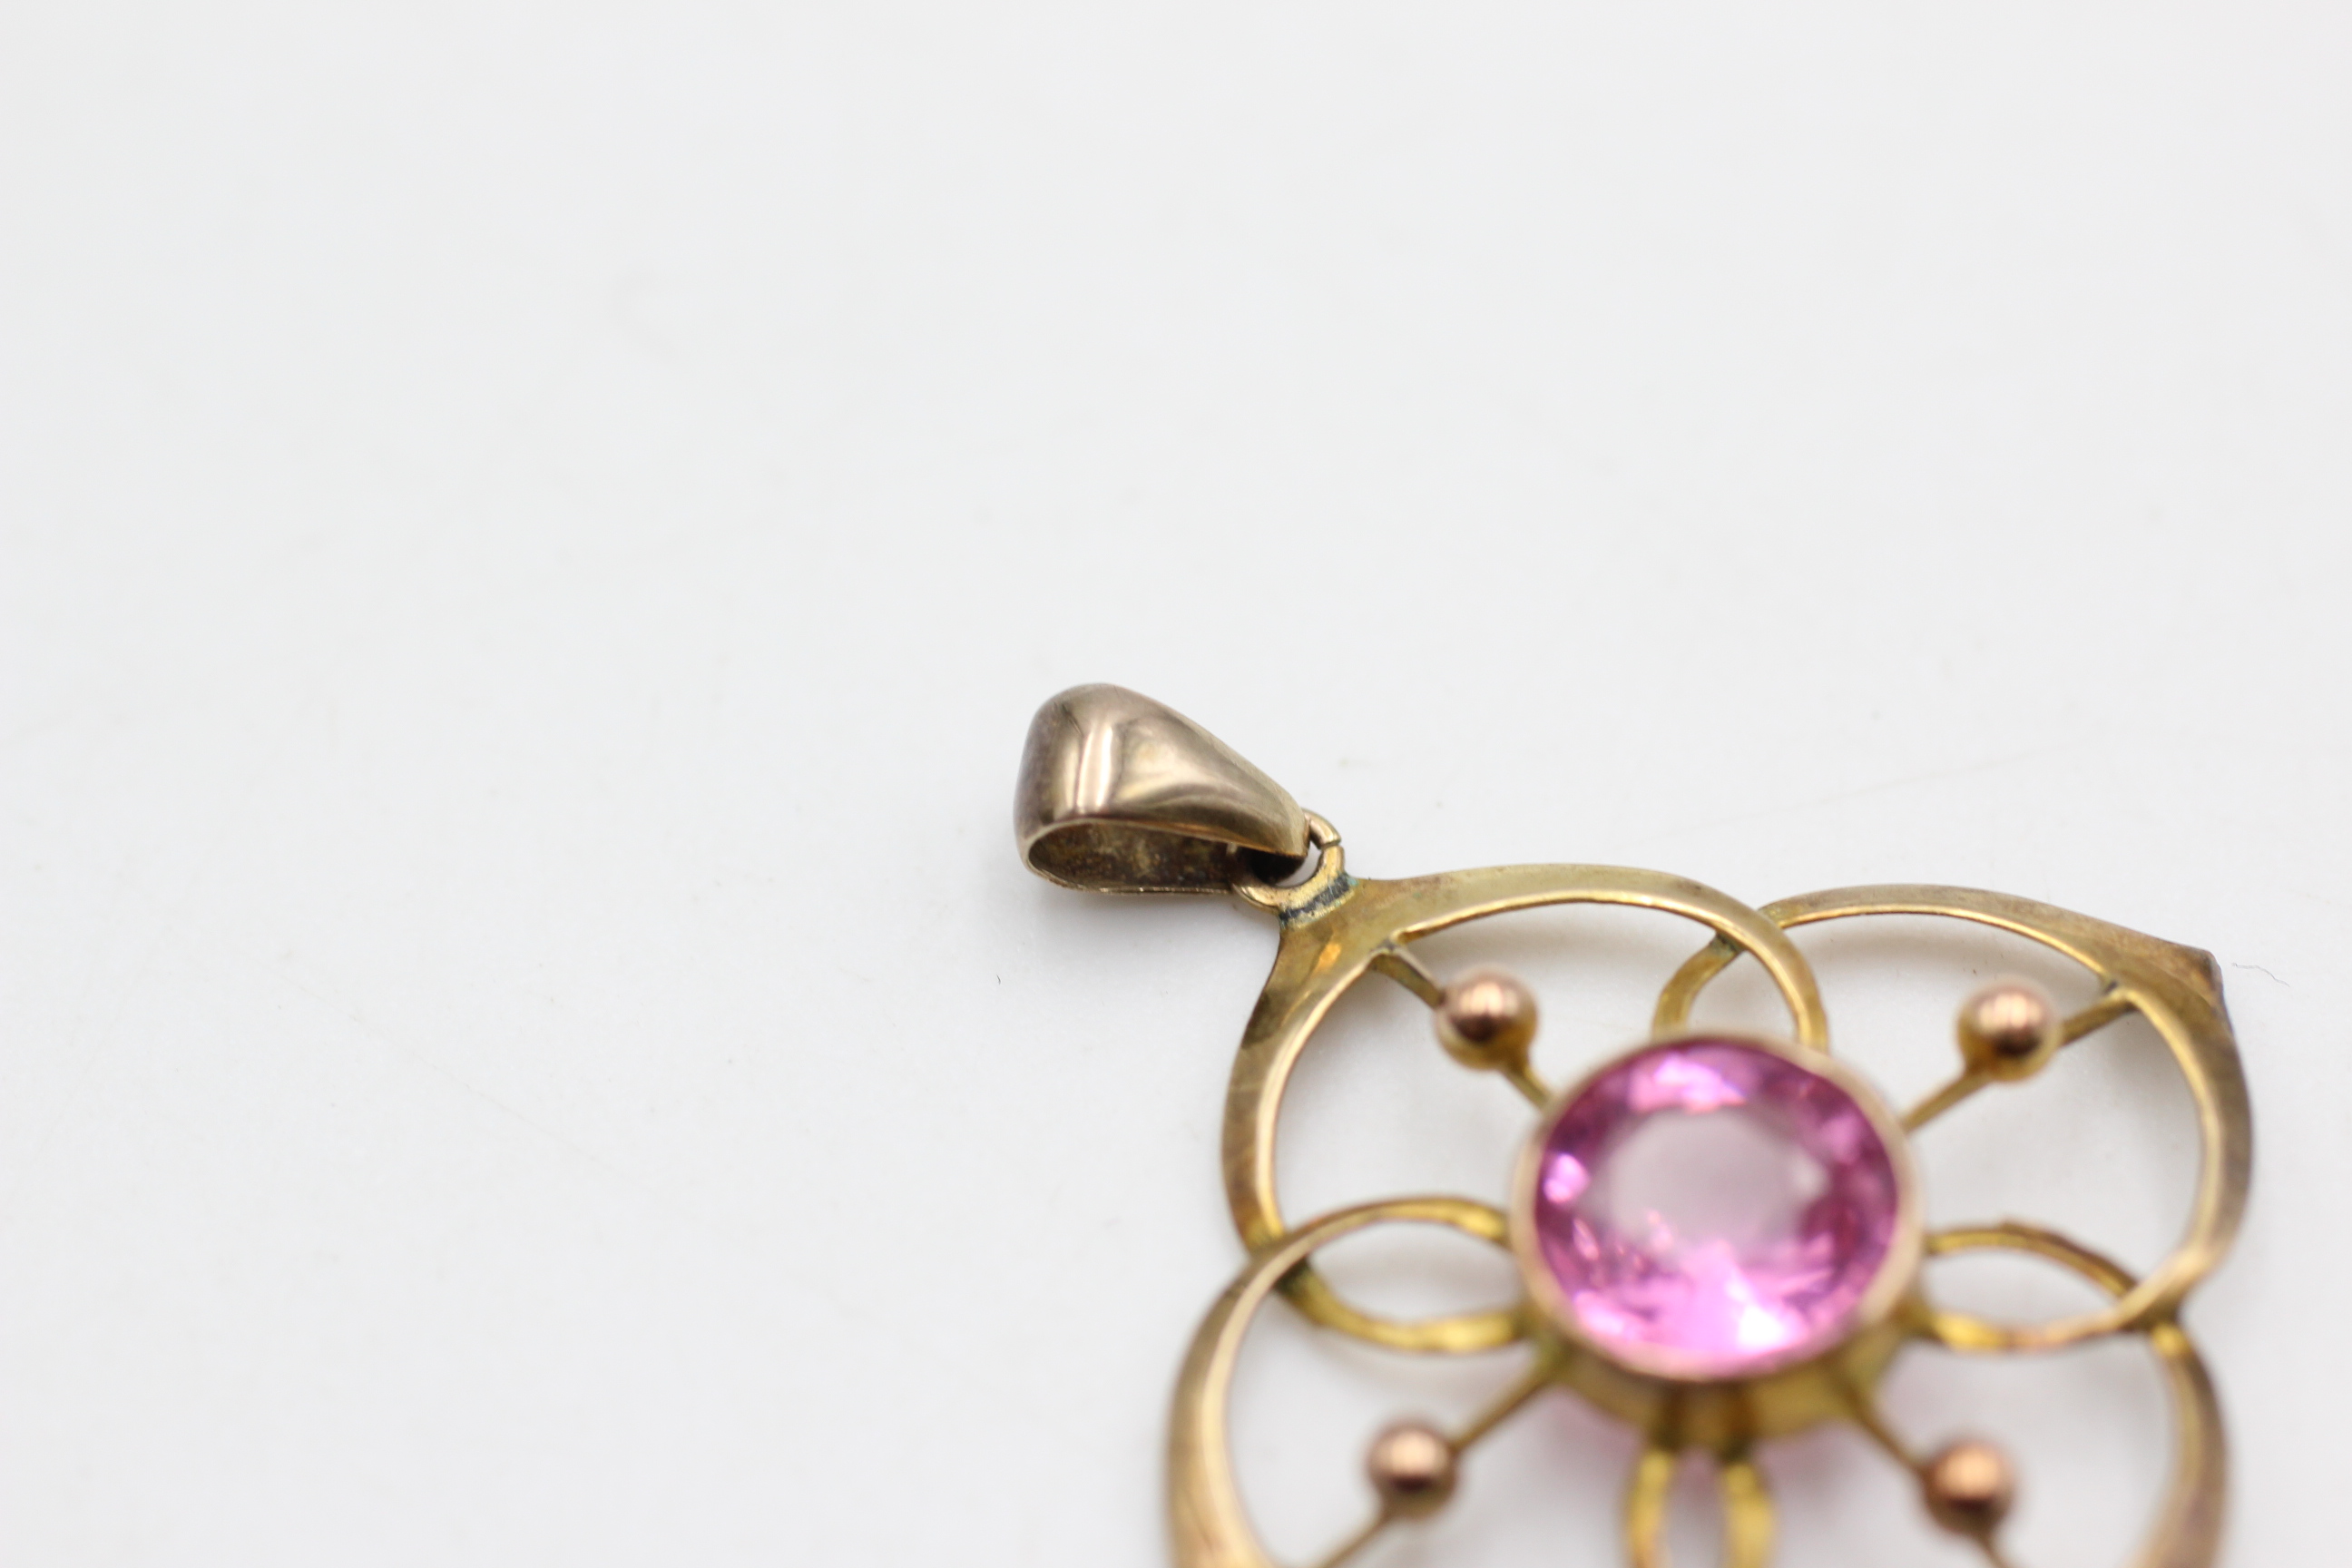 9ct gold antique garnet topped doublet lavalier pendant (1.4g) - Image 2 of 4